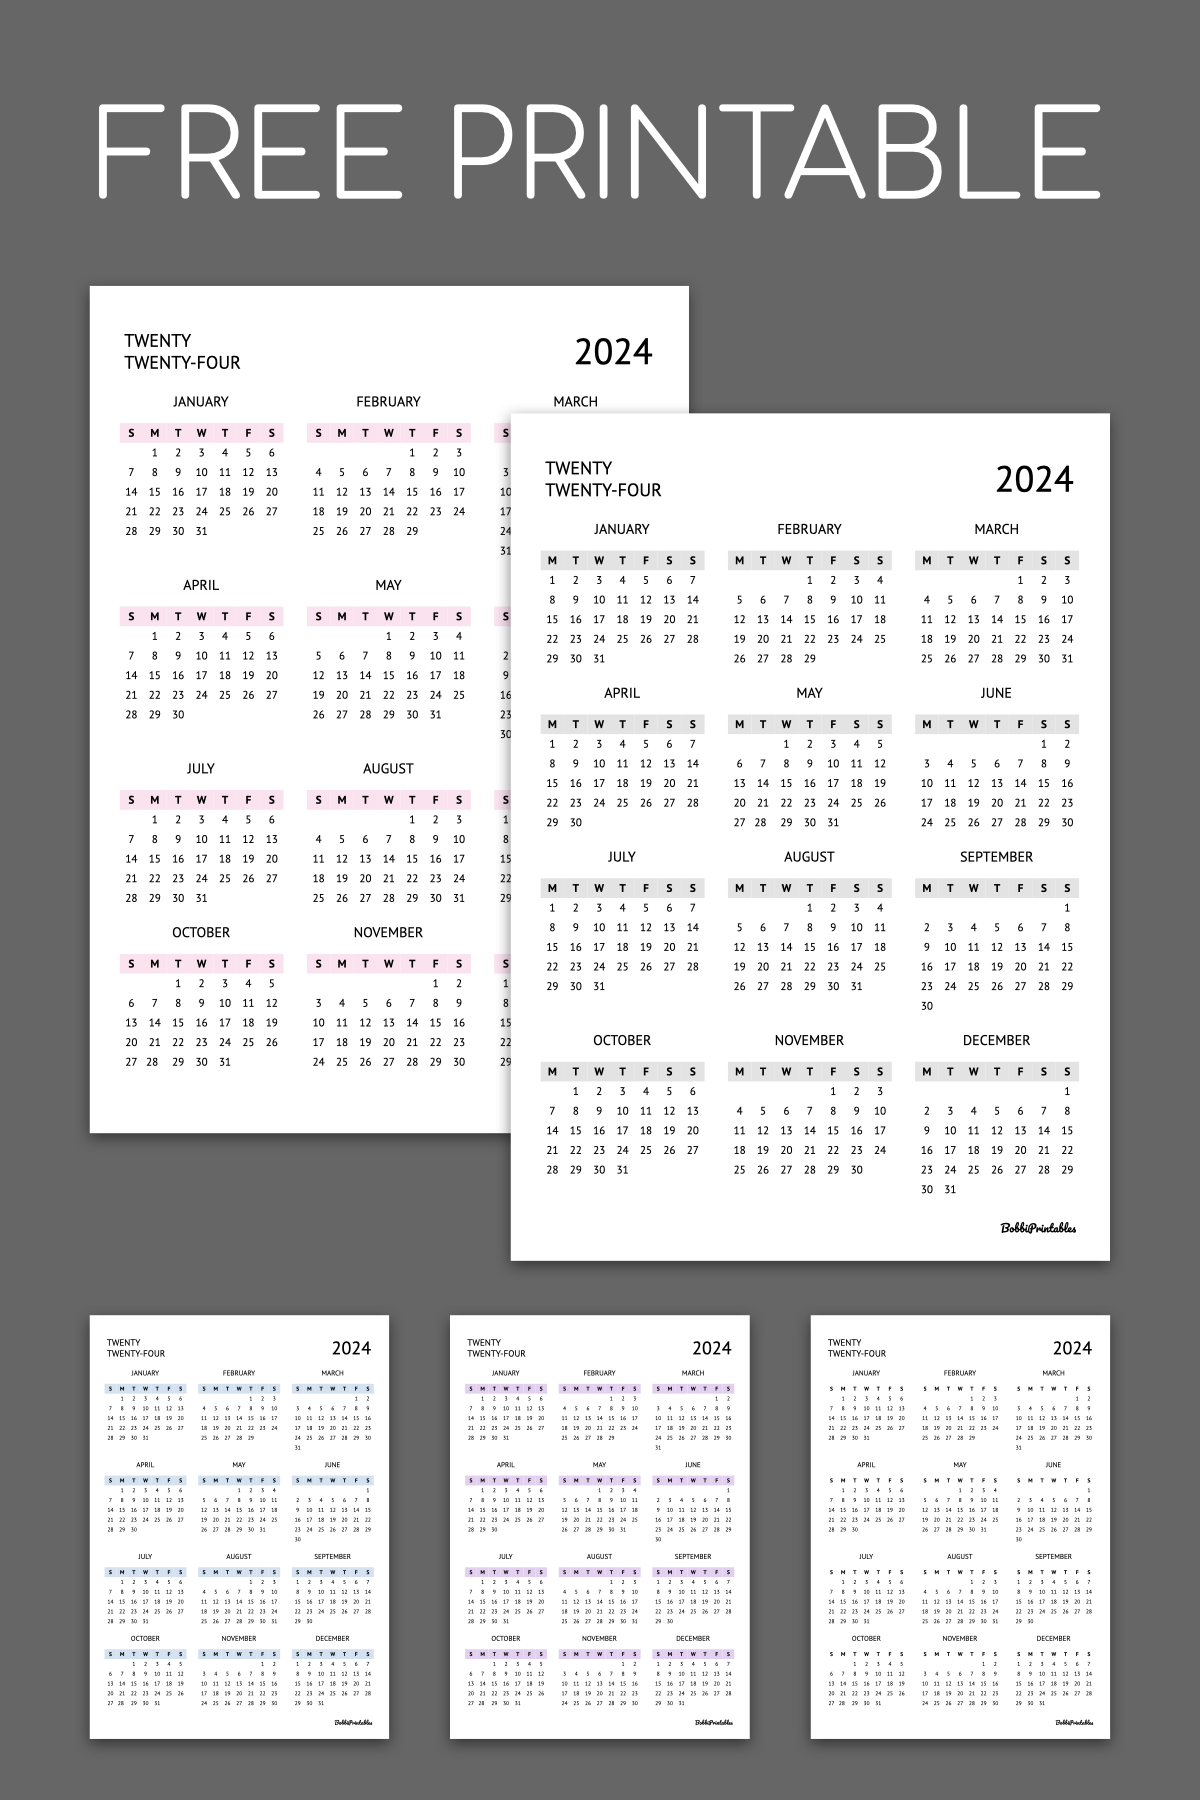 2024 Year-At-A-Glance Calendar - Free Printable Digital Insert for Free Printable Calendar 2024 A4 Size